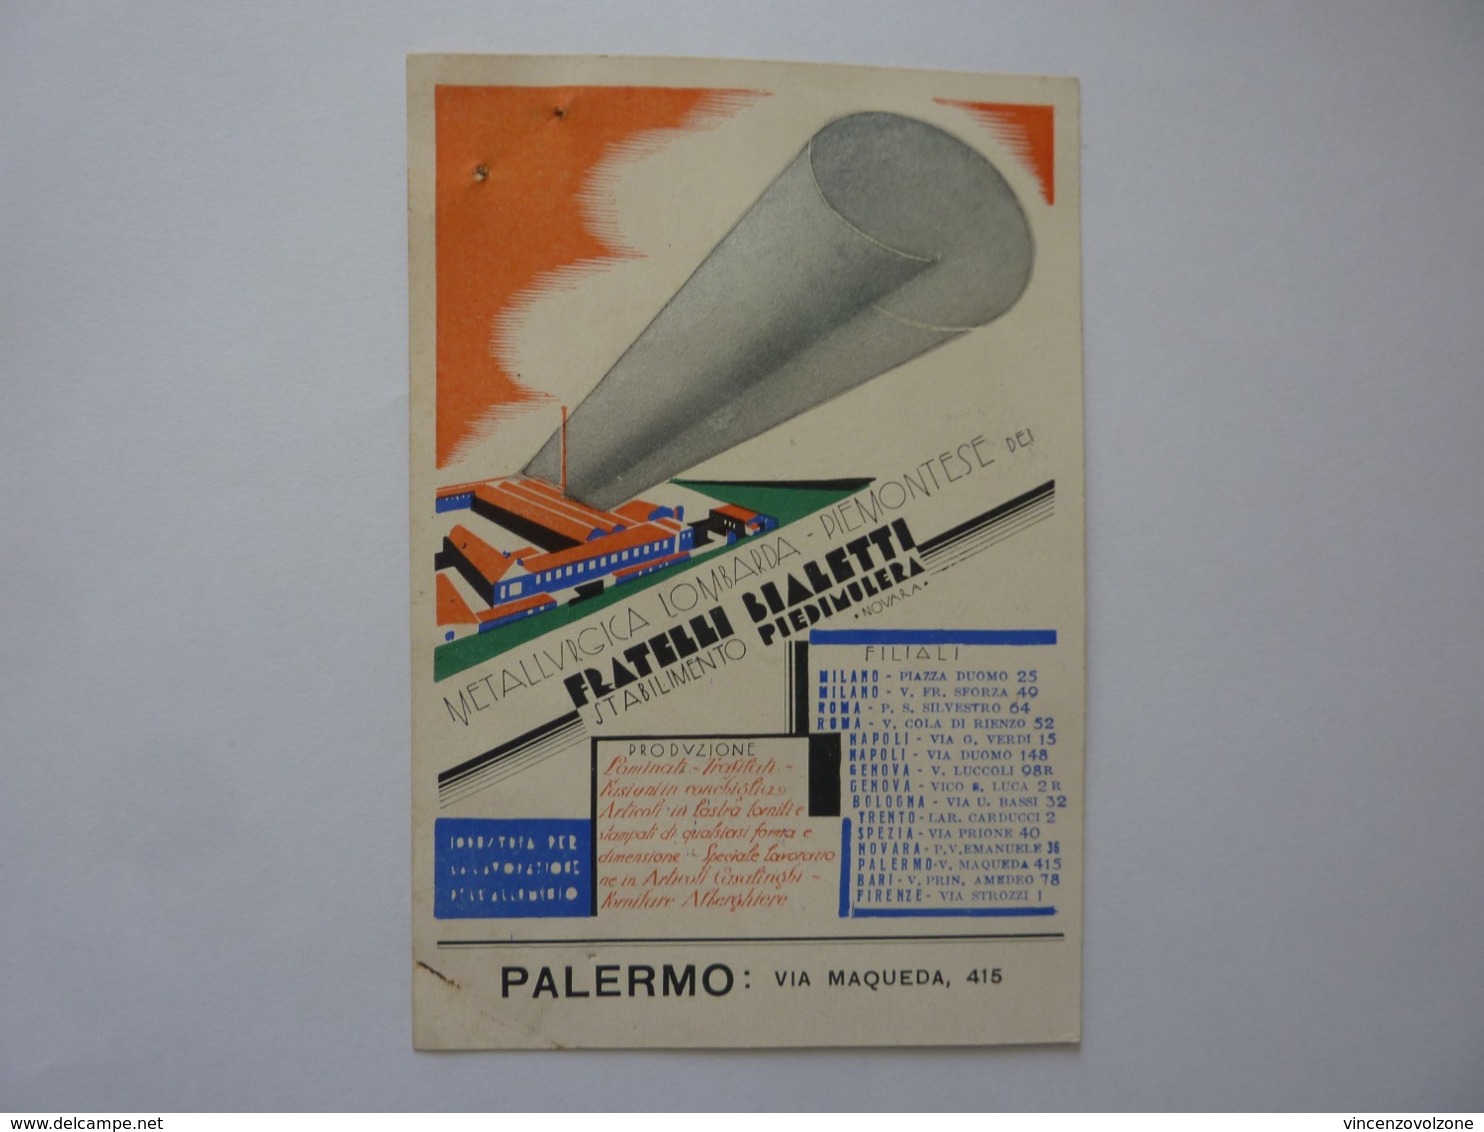 Cartolina Postale Pubblicitaria "FRATELLI BIALETTI STABILIMENTO PIEDIMULERA NOVARA" 1935 - Storia Postale